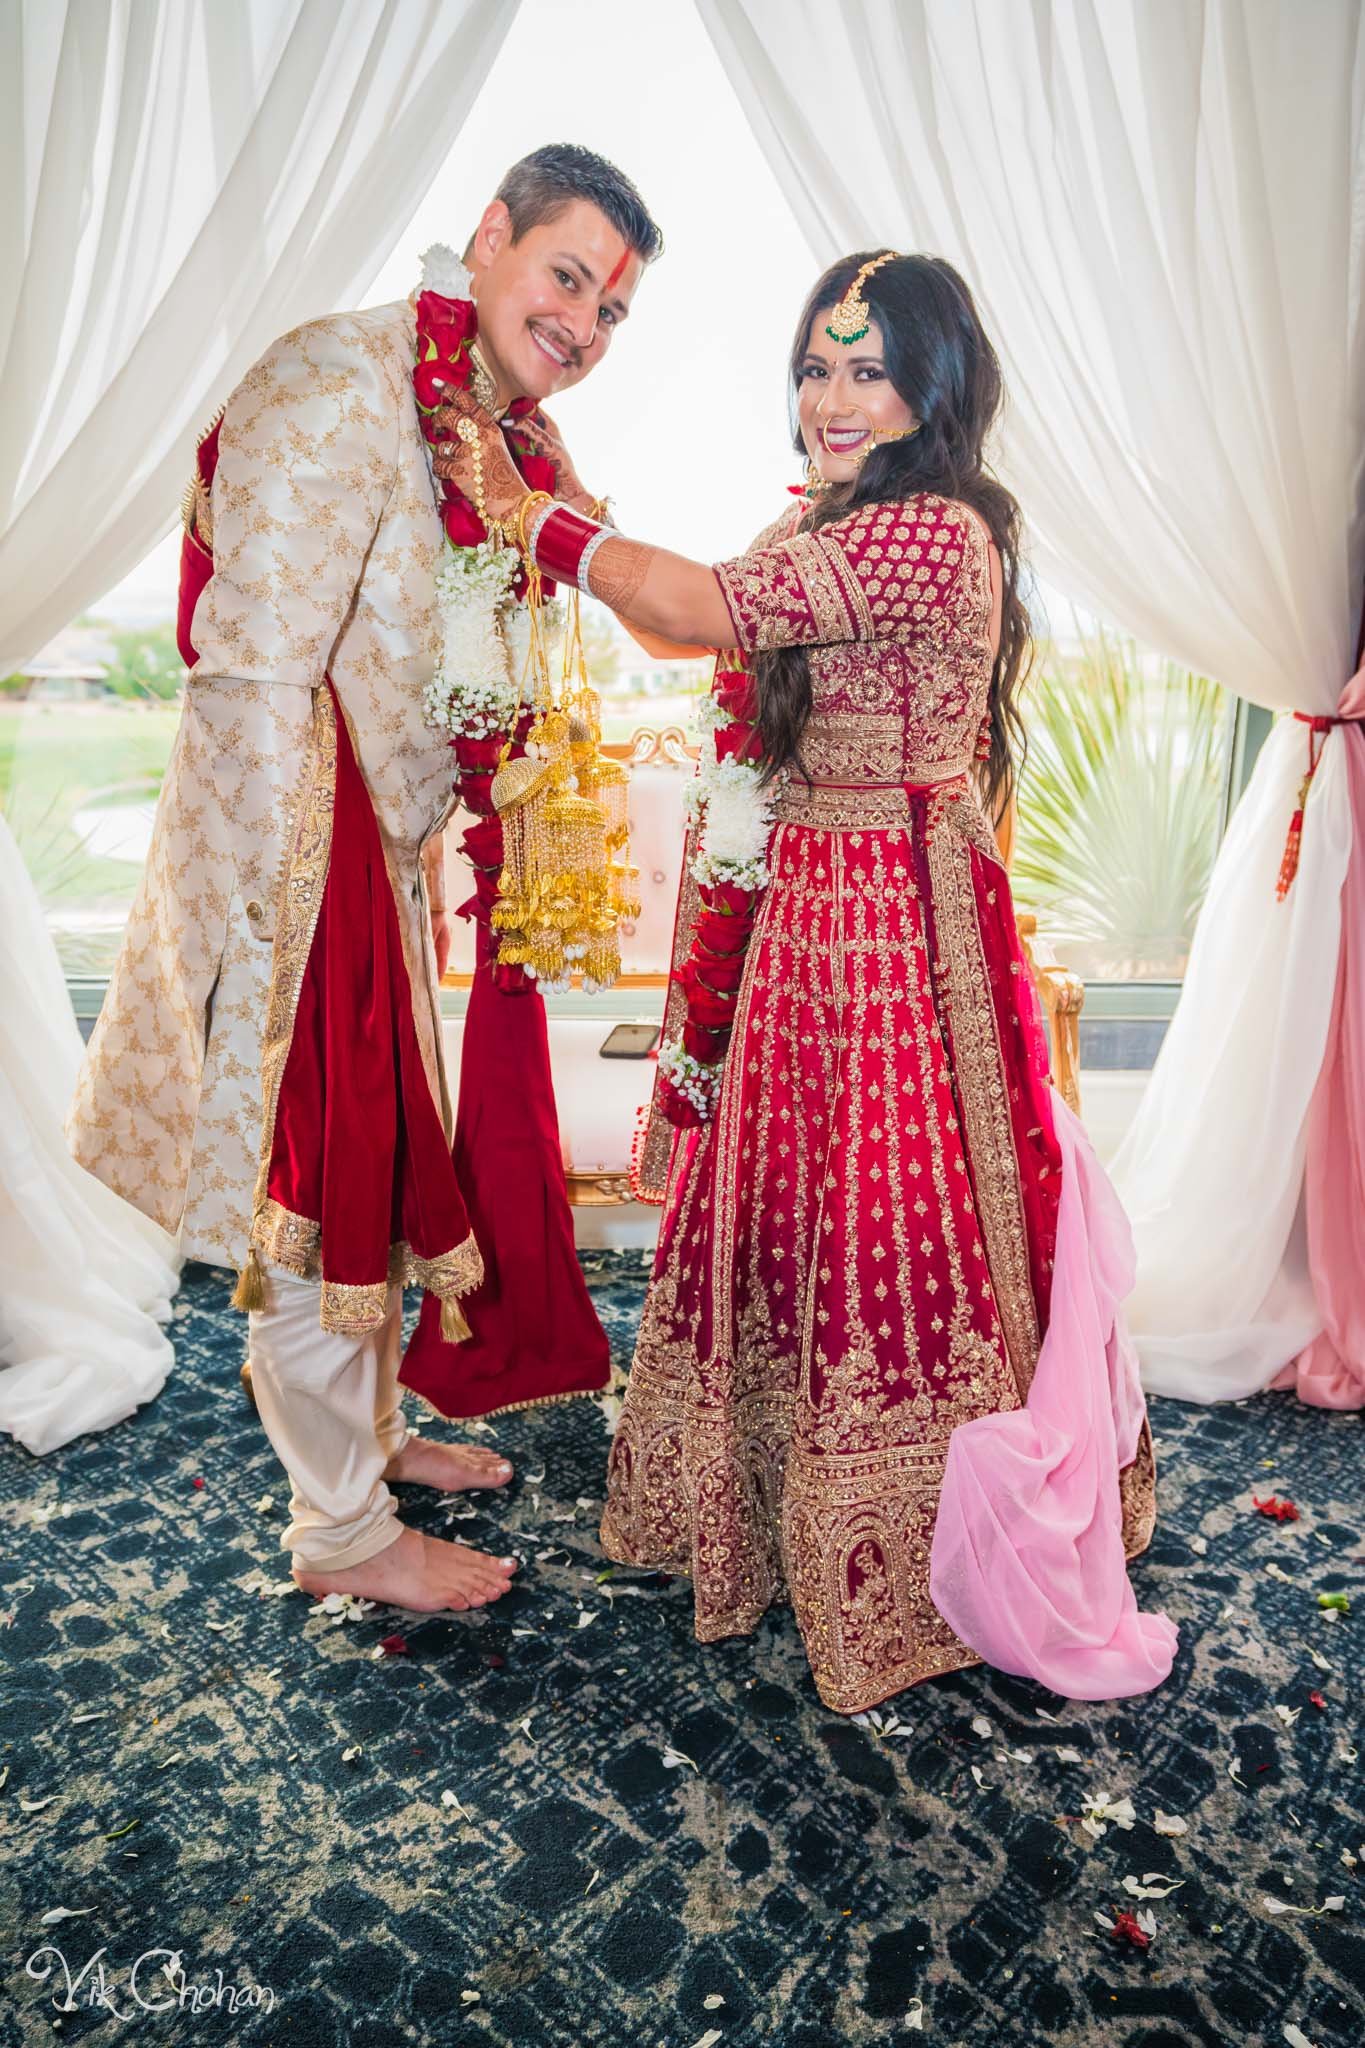 2022-06-09-Annie-&-Steven-Las-Vegas-Indian-Wedding-Ceremony-Photography-Vik-Chohan-Photography-Photo-Booth-Social-Media-VCP-205.jpg